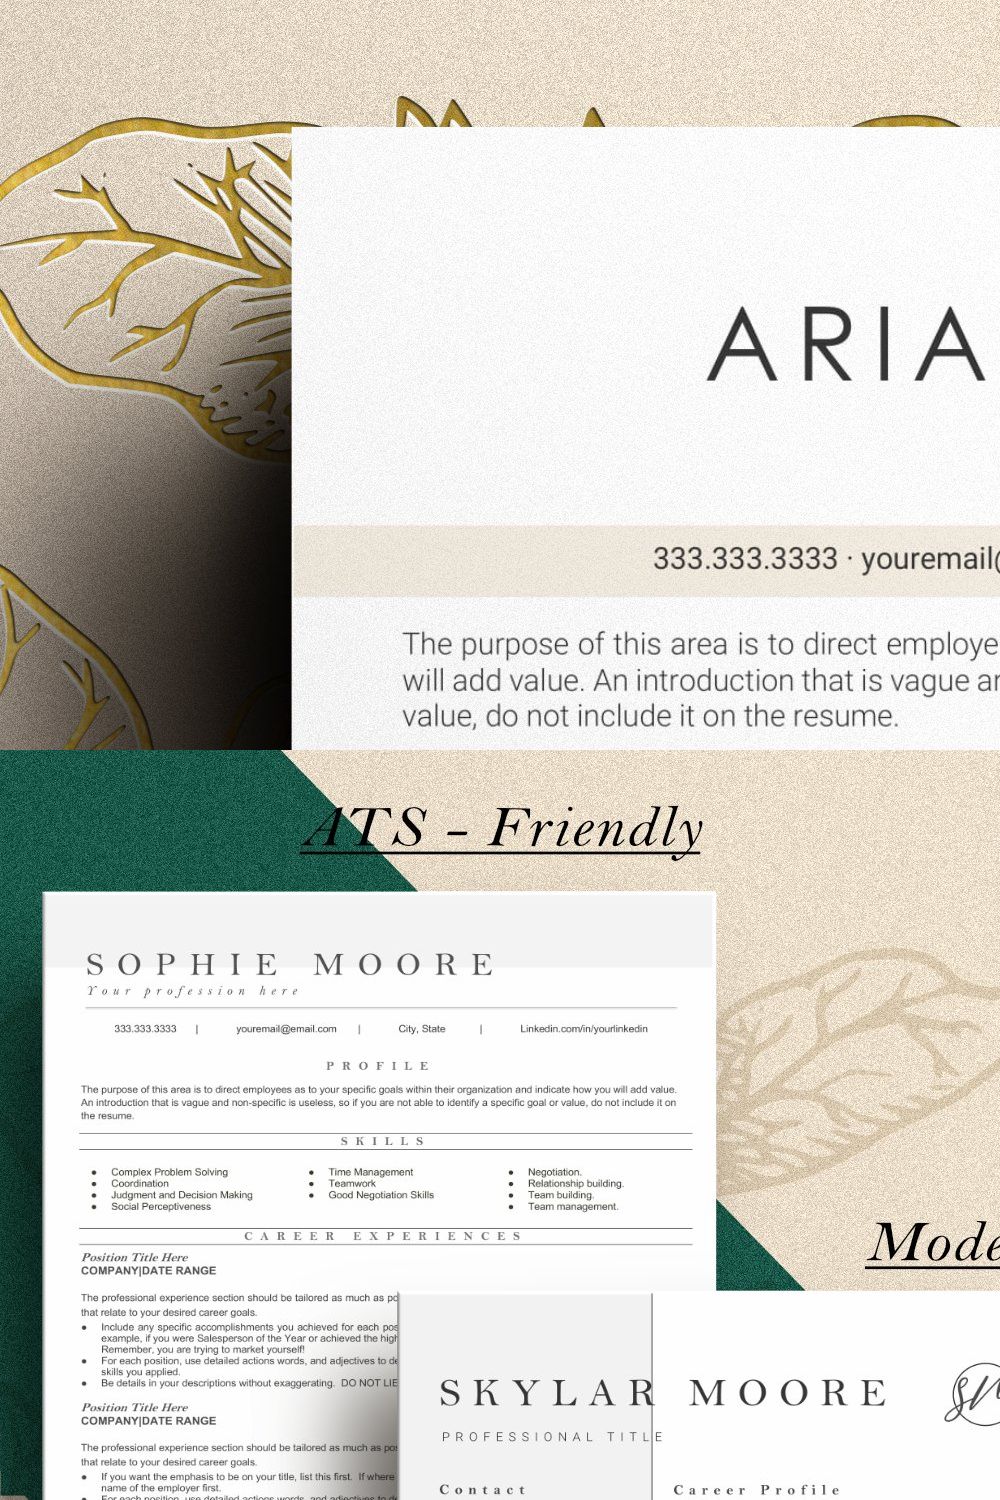 ARIANA - ATS Resume/CV + BONUSES pinterest preview image.